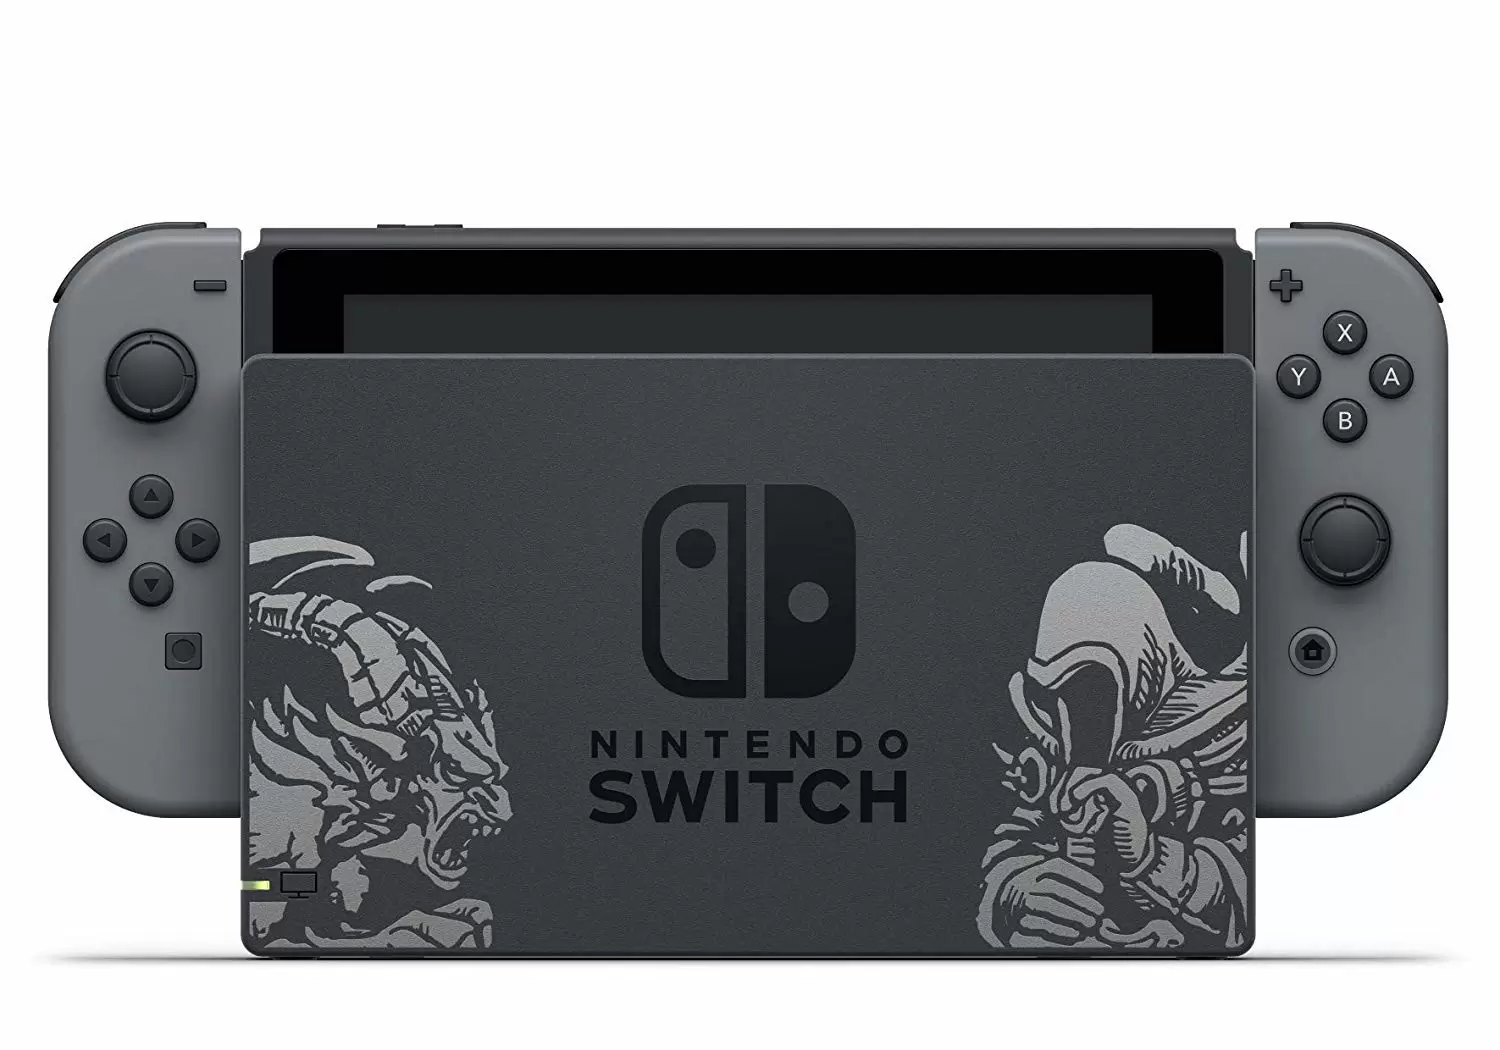 Nintendo Switch Stuff - Nintendo Switch Edition Diablo III